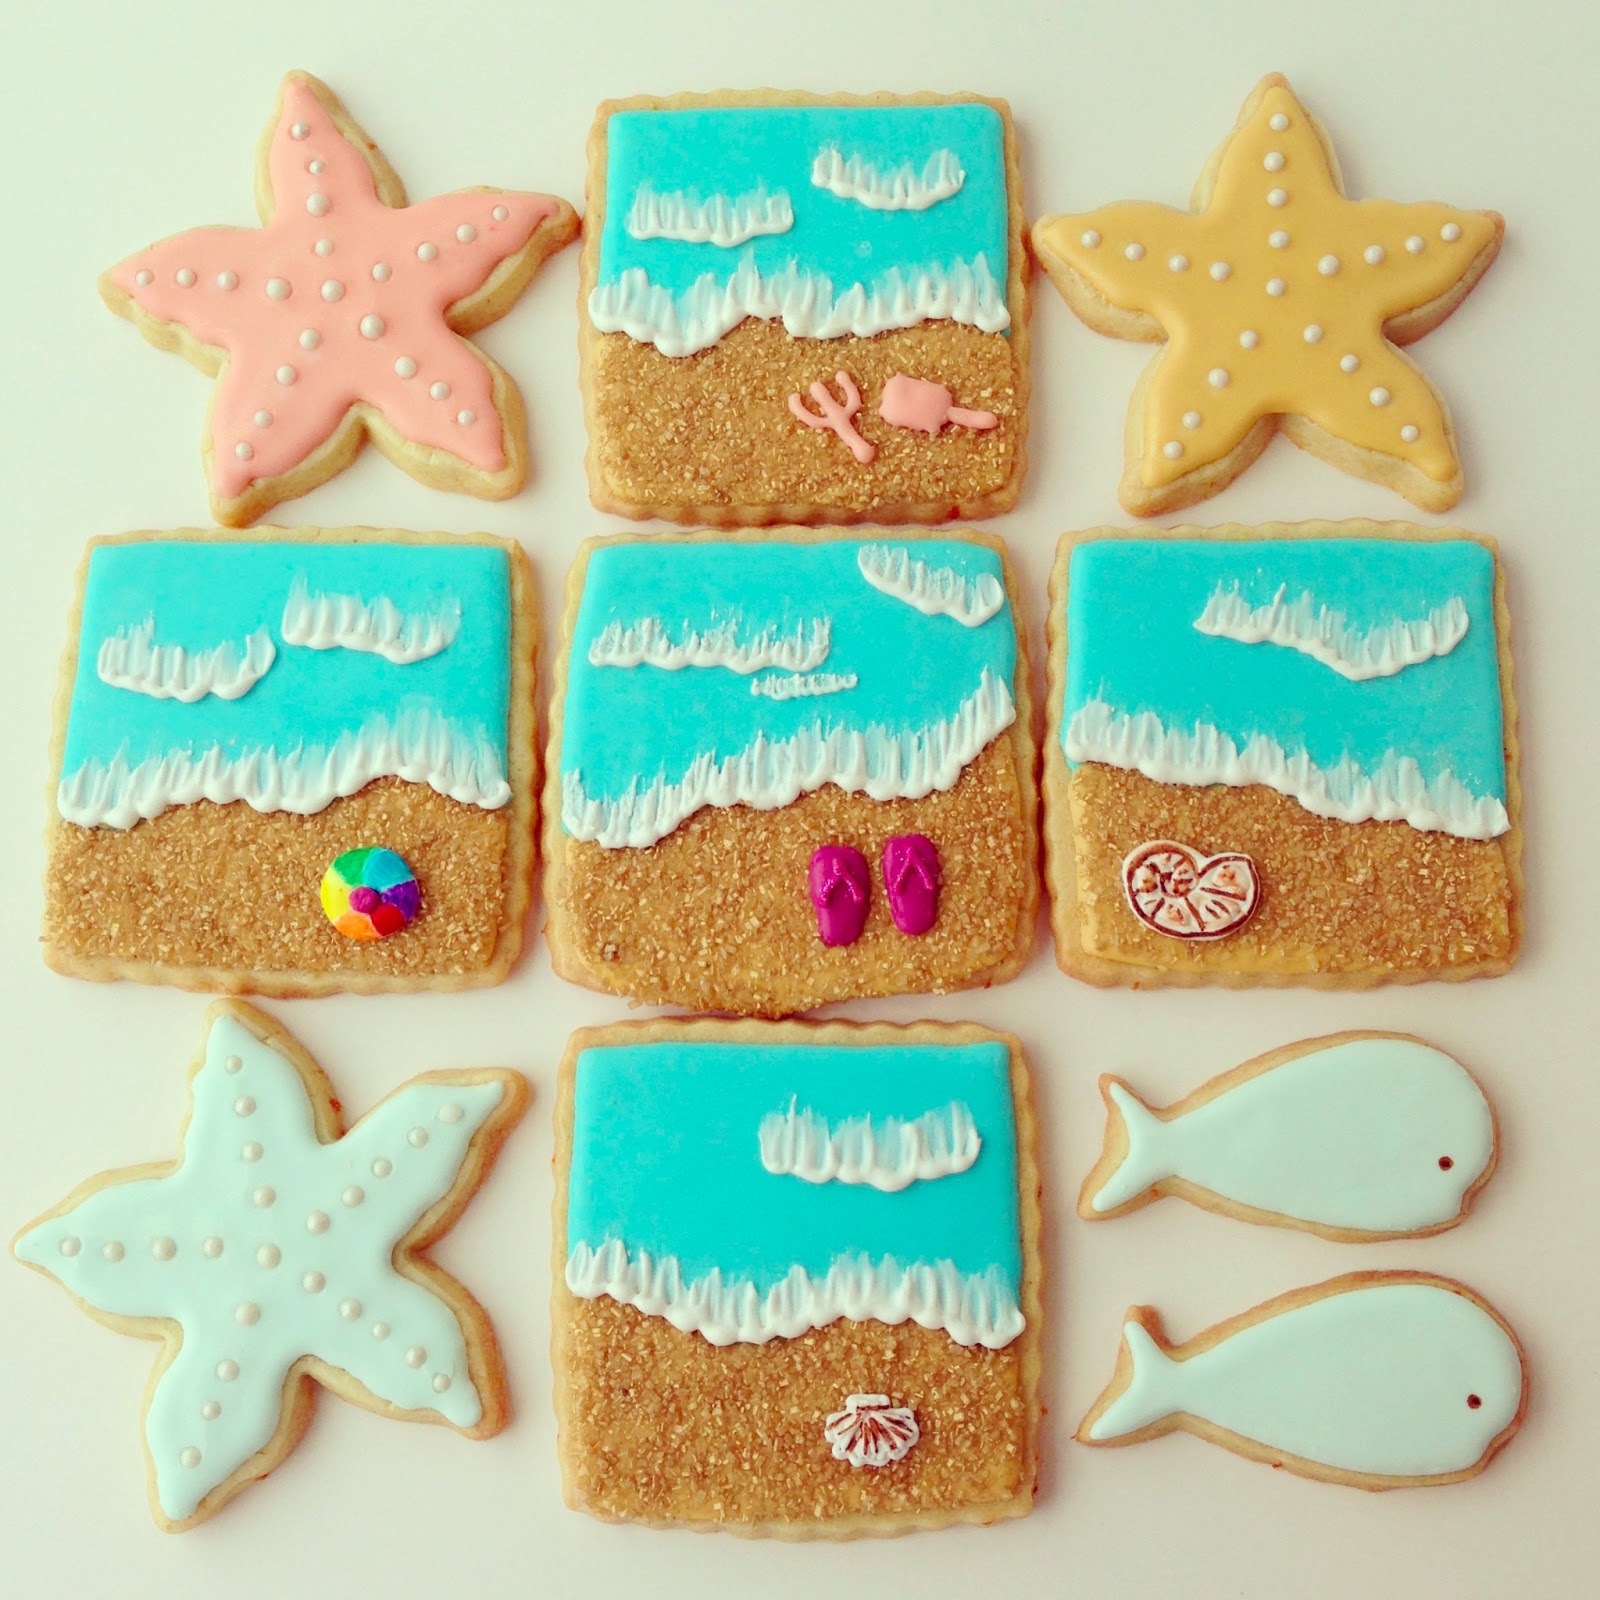 Askanam: Making beach themed cookies